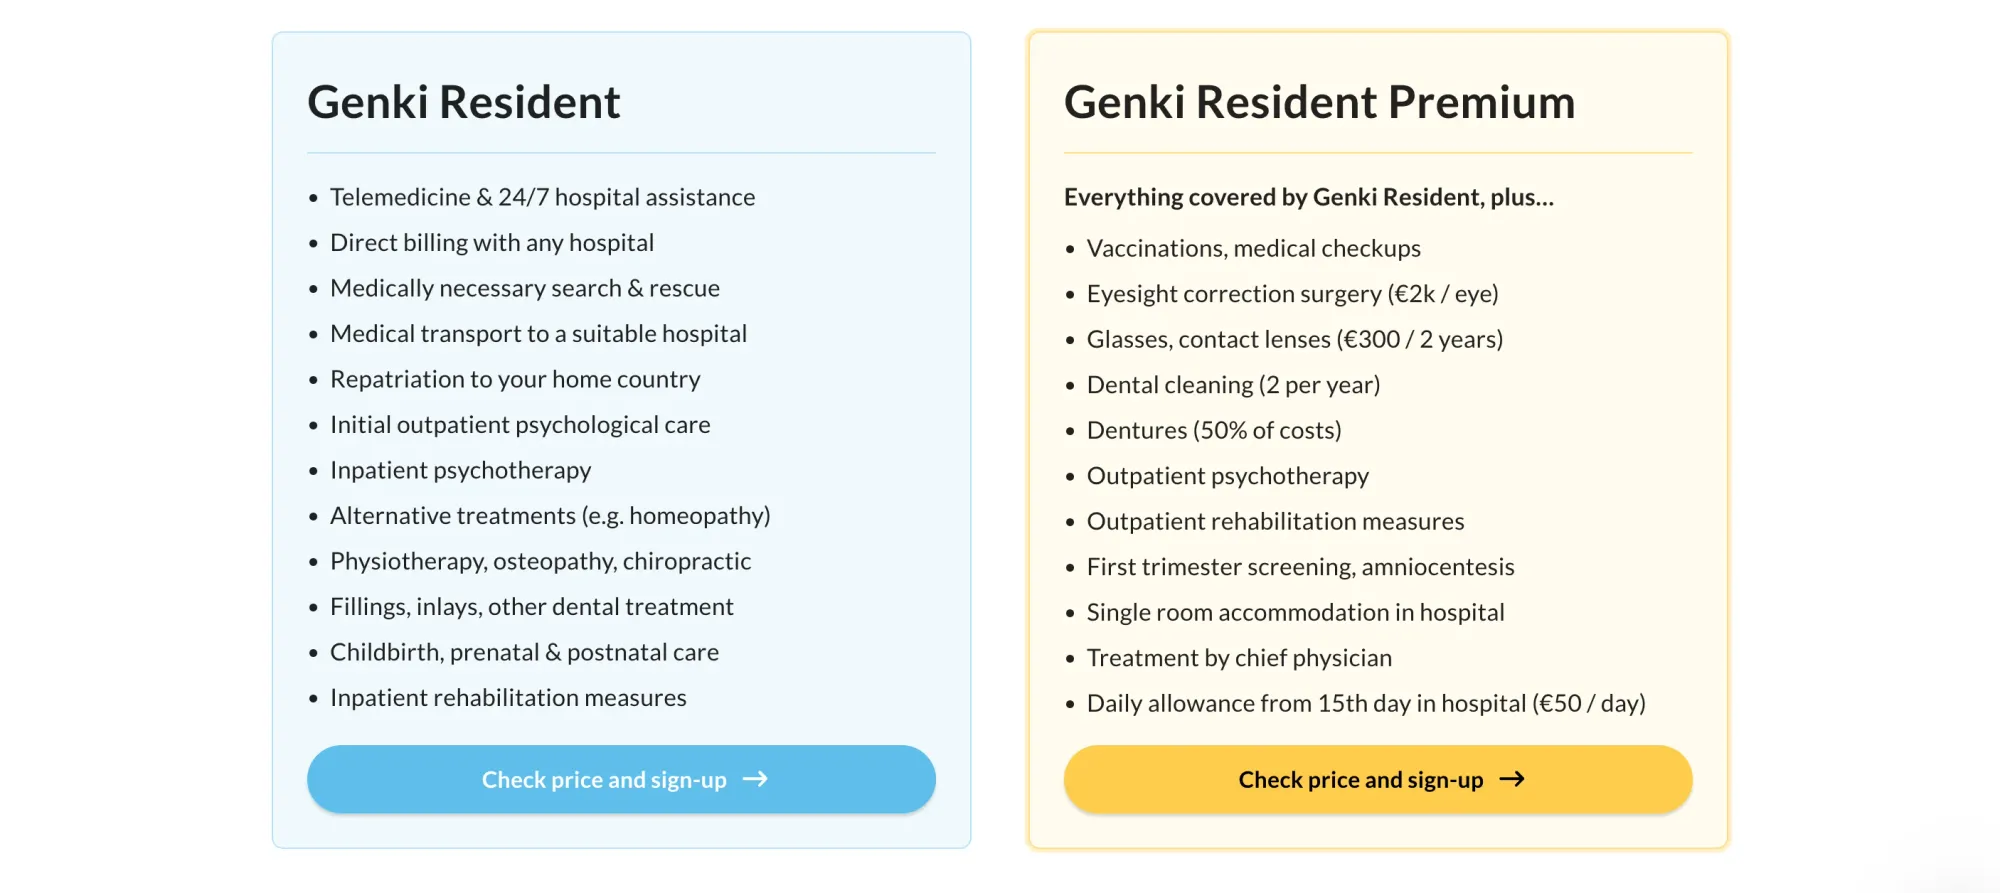 Genki Resident and Genki Resident Premium plans